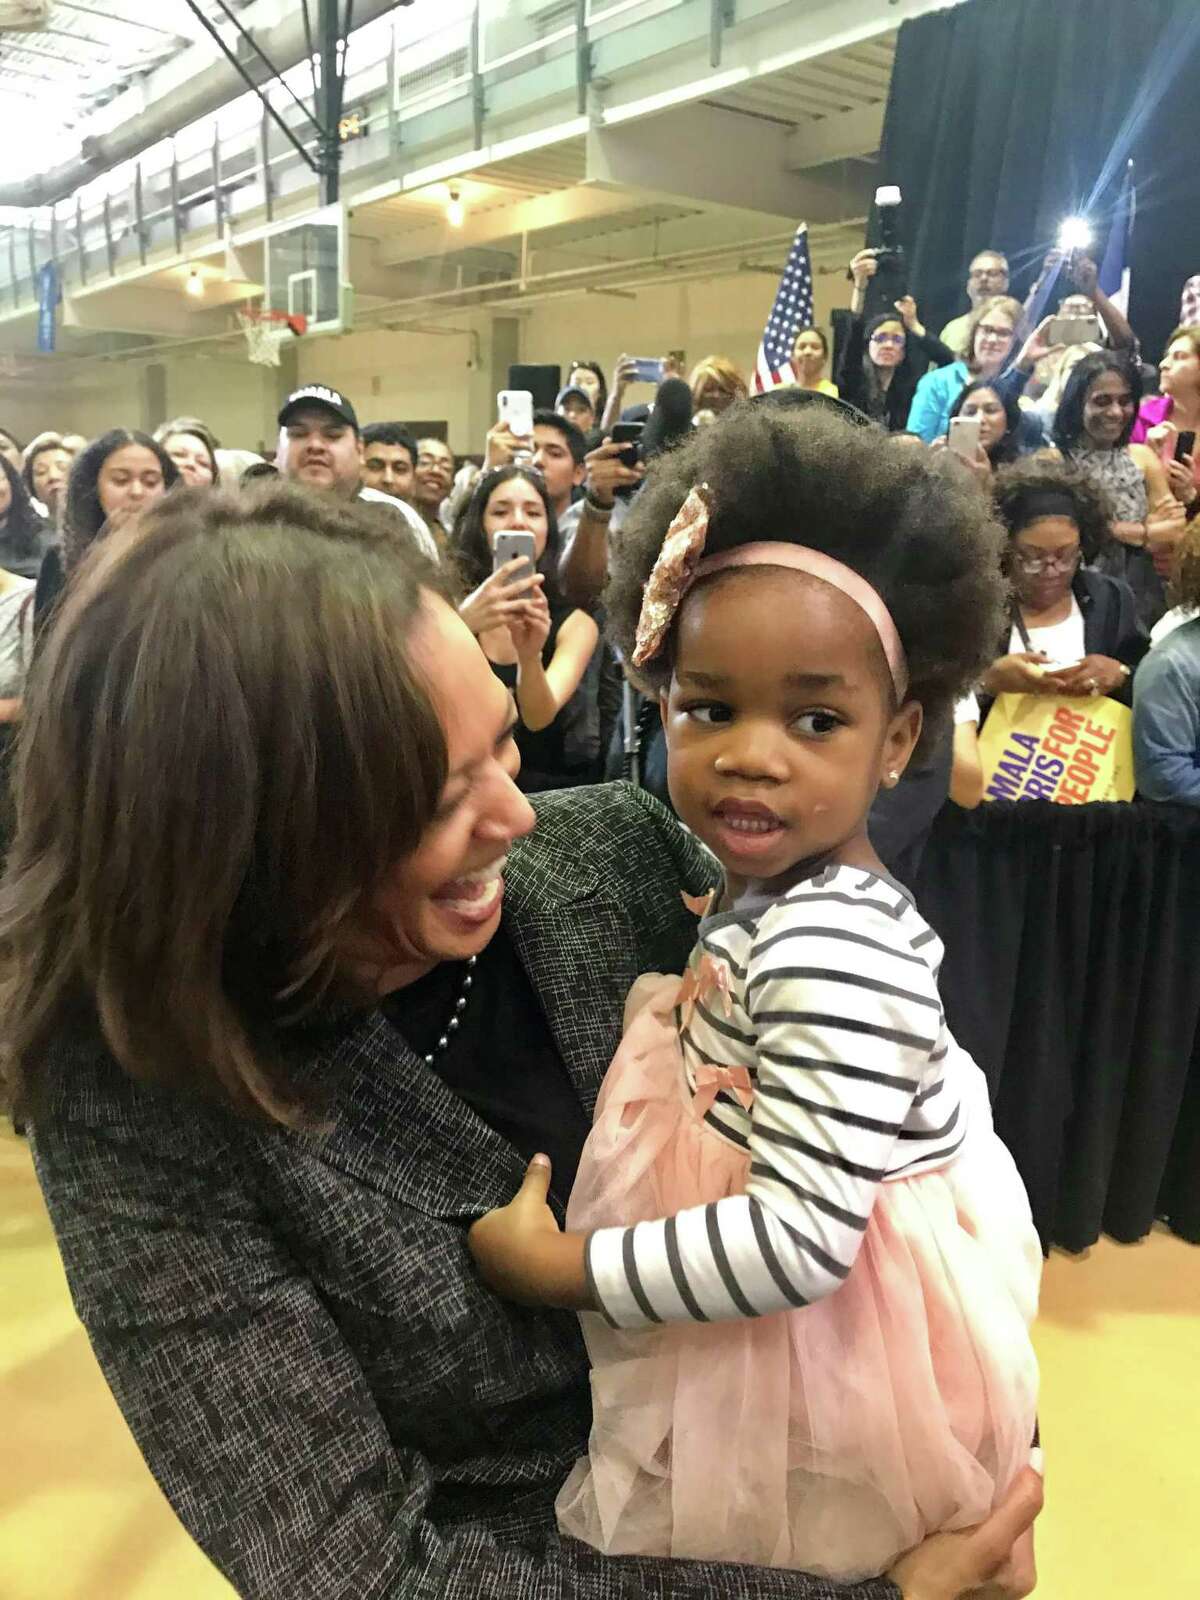 U.S. Sen. Kamala Harris talks with 2-year-old Urennaya “Ure” Unaka during a stop in Houston in 2018. Harris met the little girl again in 2020 in Houston, when Ure showed her the earlier photo.